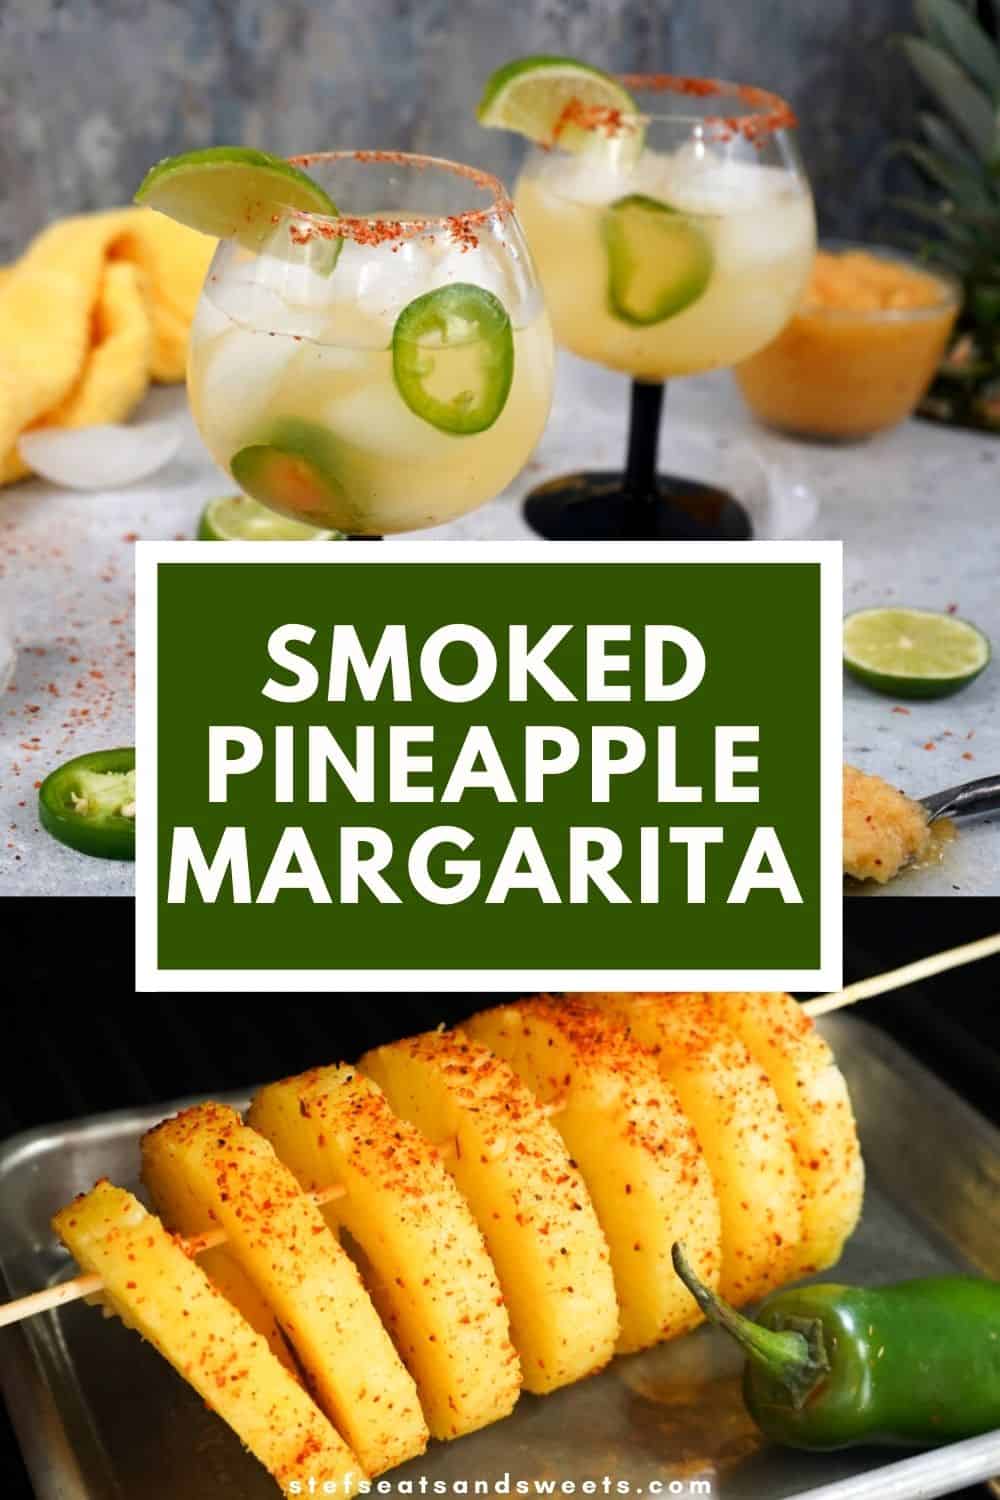 Smoked pineapple margarita collage